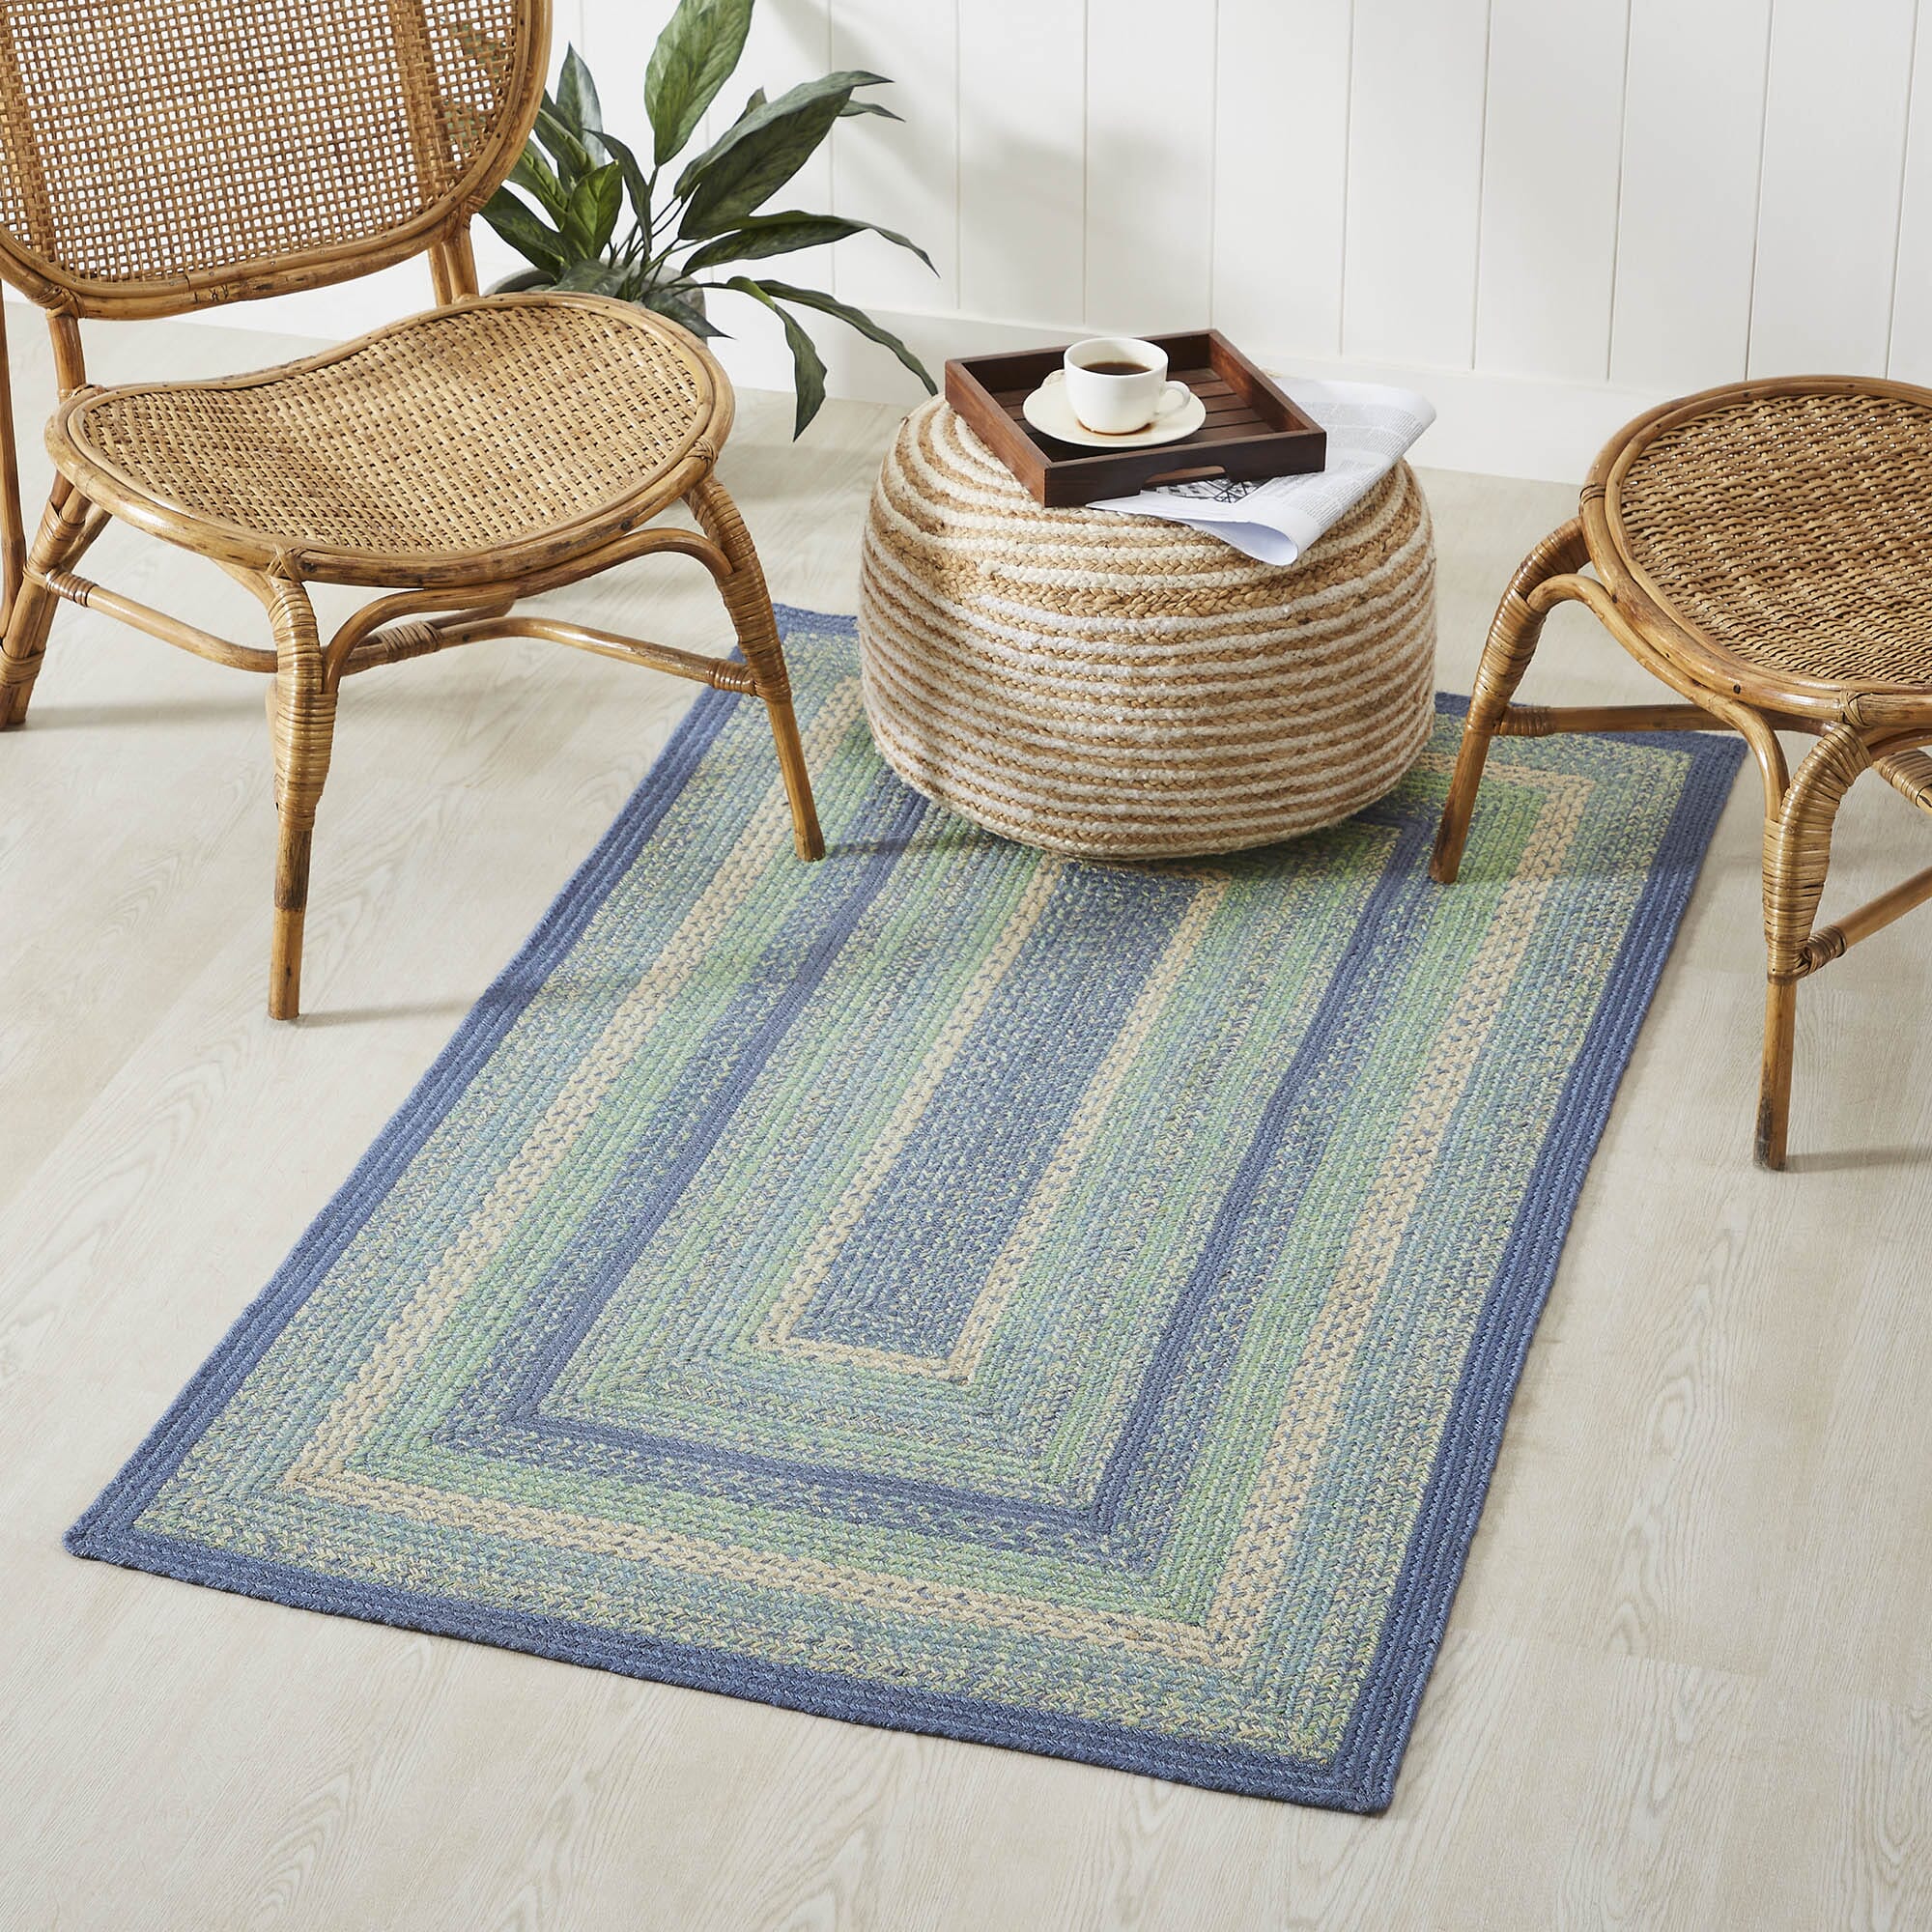 Jolie rectangle braided rug